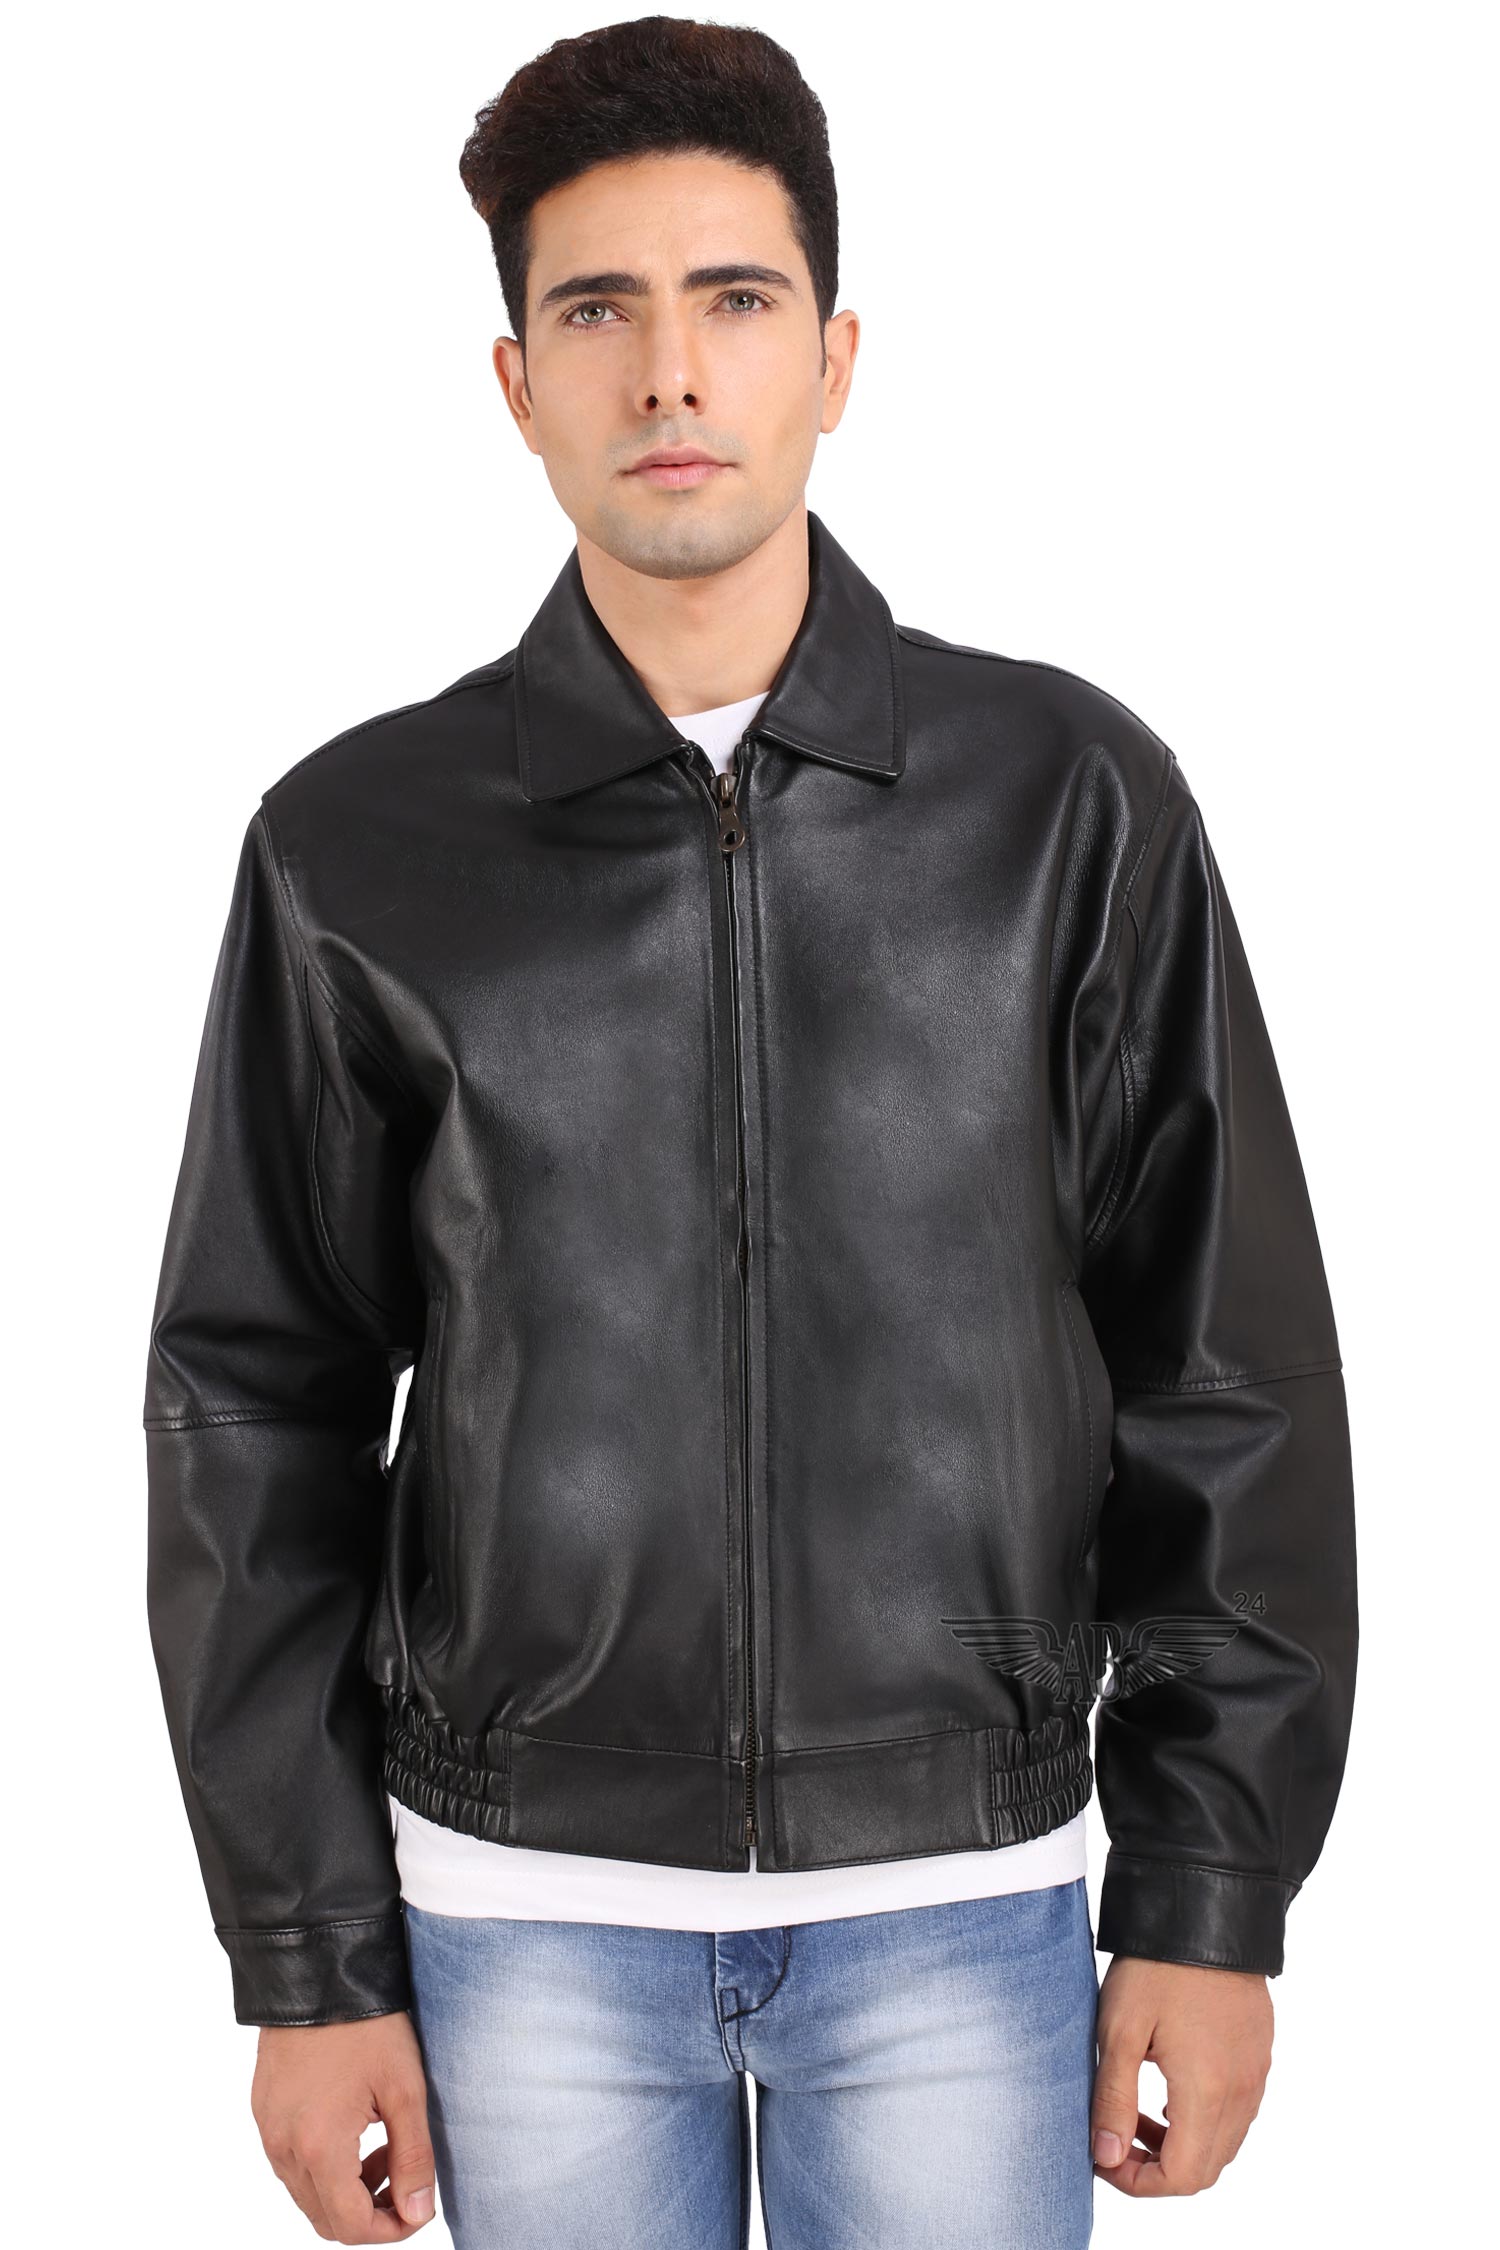 Close view of black Bomber jacket. It is zipped. Elegant. full sleeves.  